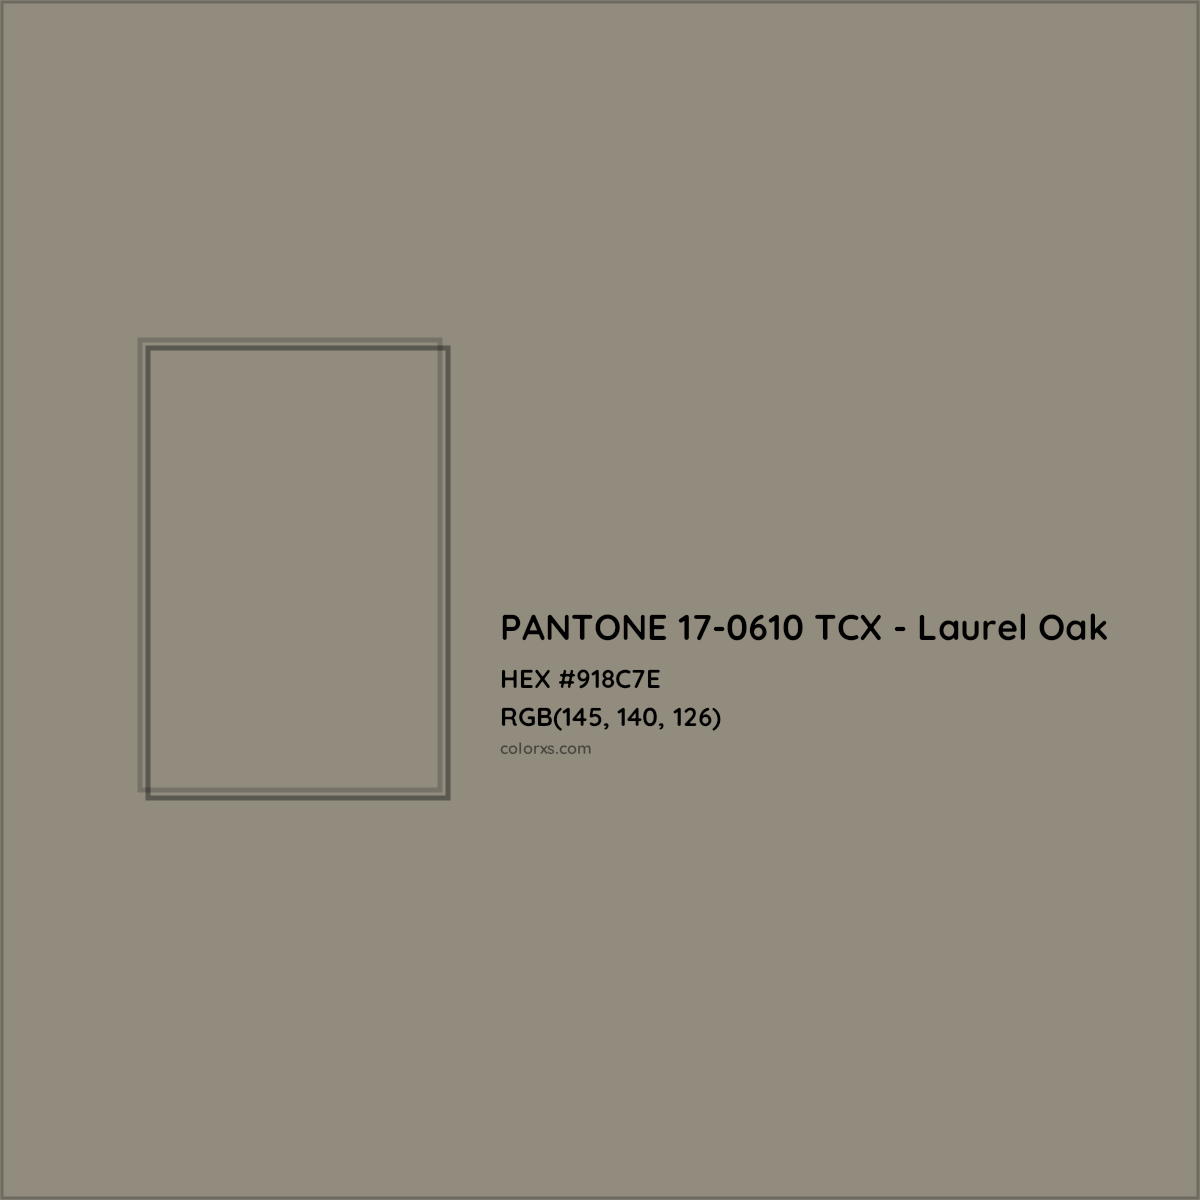 HEX #918C7E PANTONE 17-0610 TCX - Laurel Oak CMS Pantone TCX - Color Code